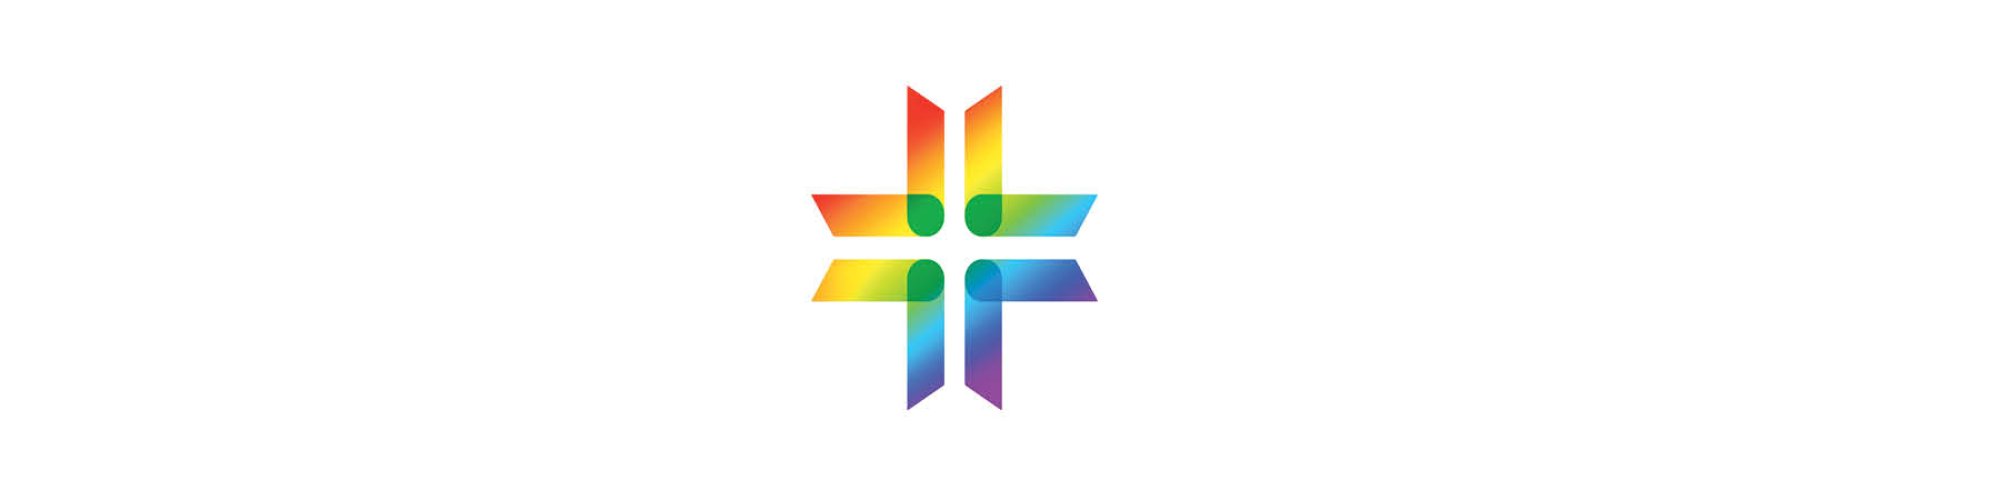 Cascade Medical logo in rainbow colors